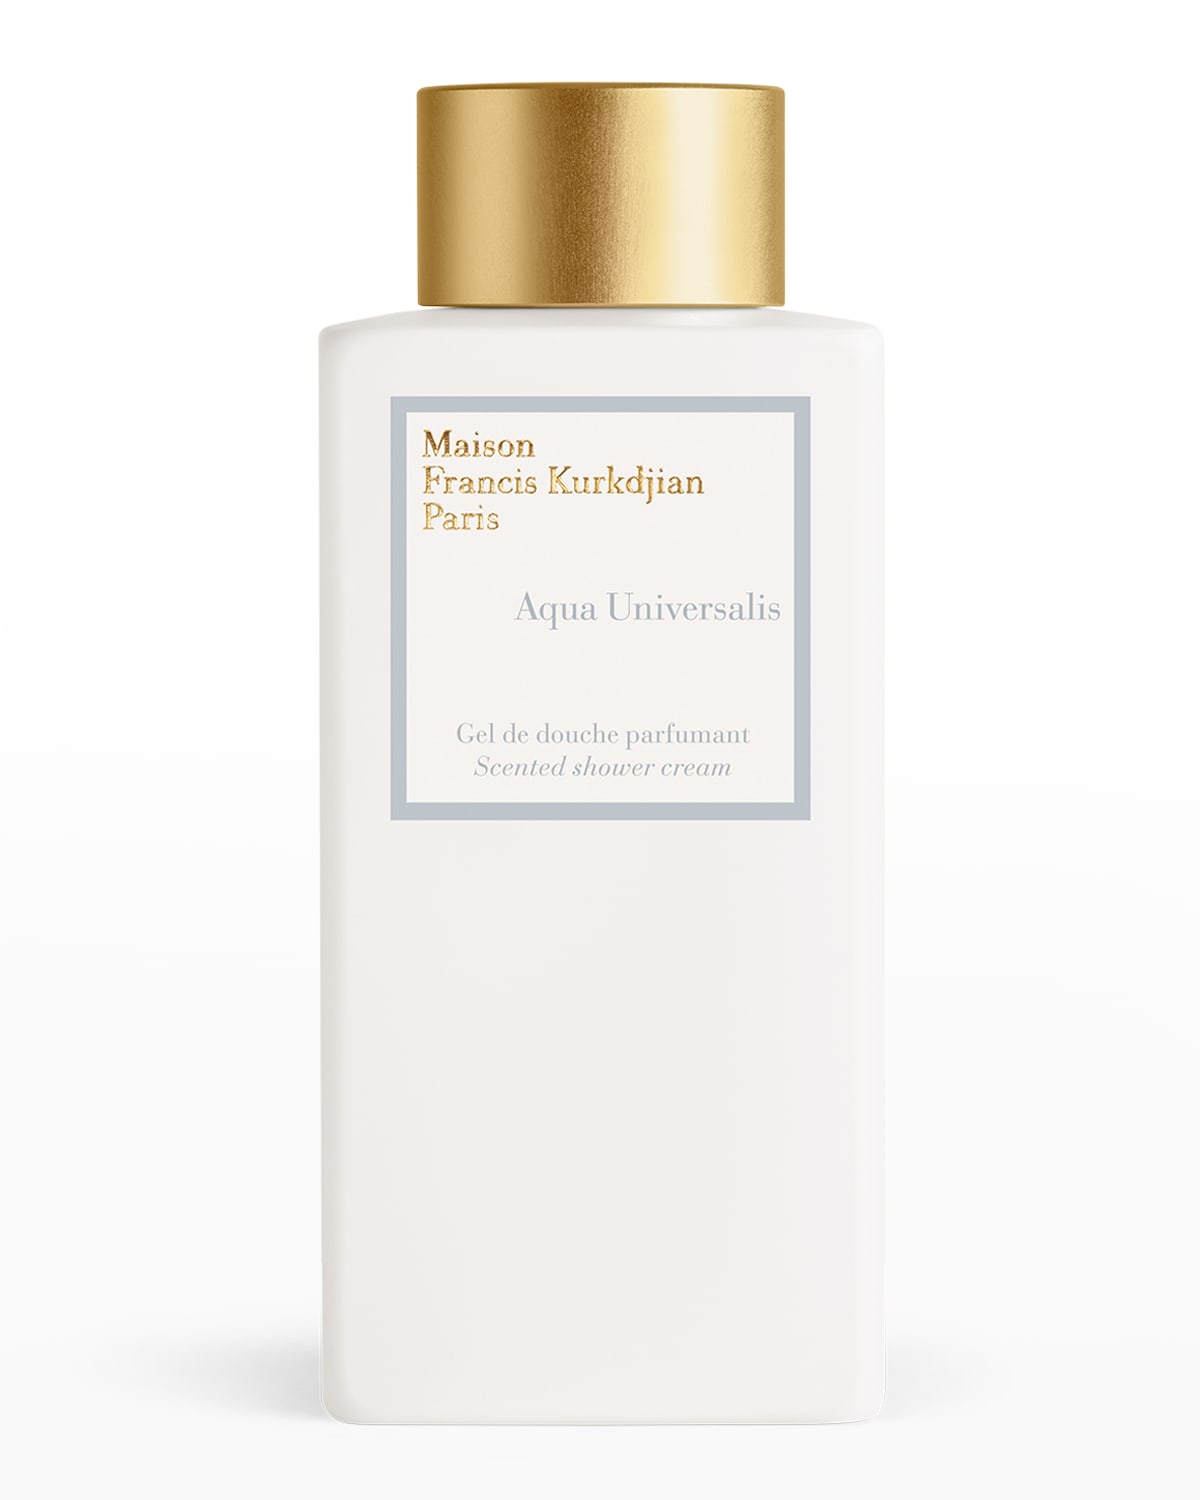 Maison Francis Kurkdjian Aqua Universalis Scented Shower Cream, 8.4 oz.